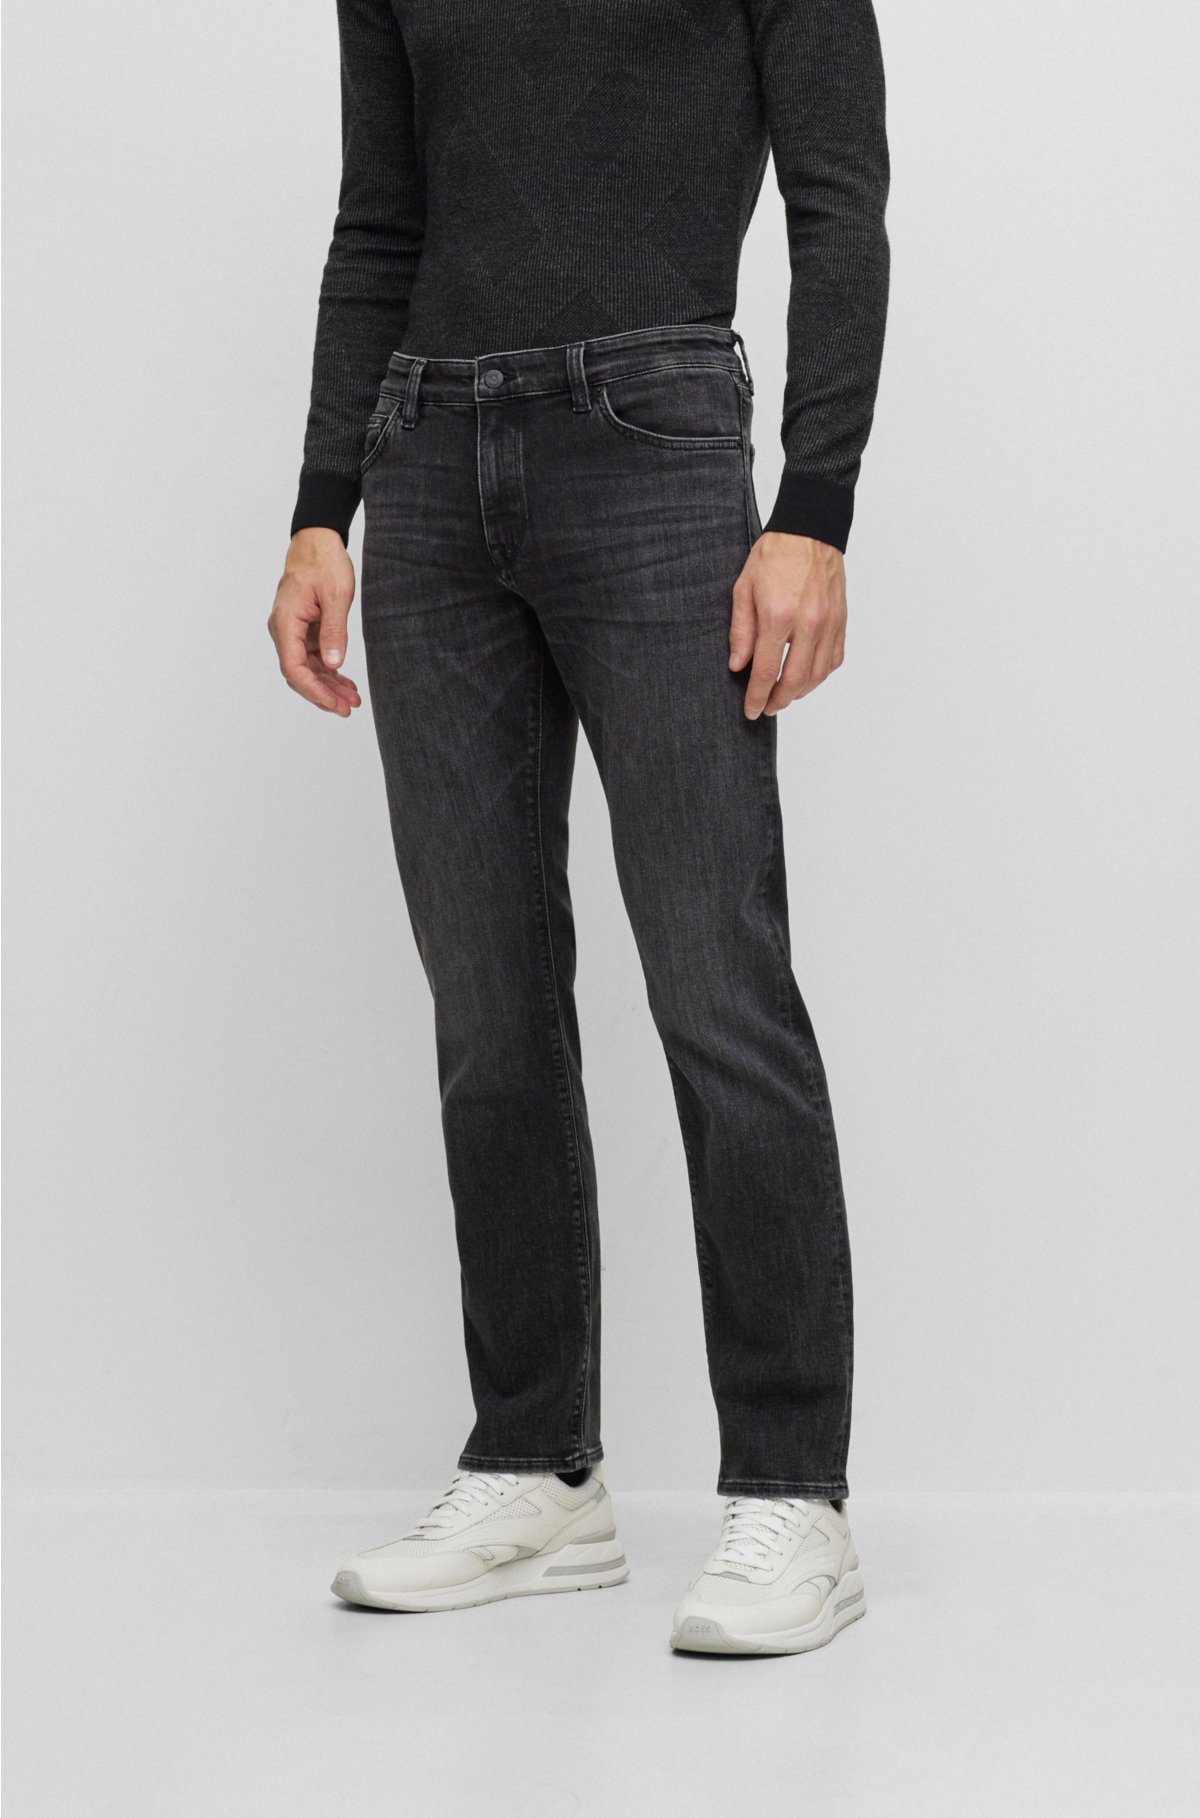 Regular-fit jeans in black Coolmax® denim, Black